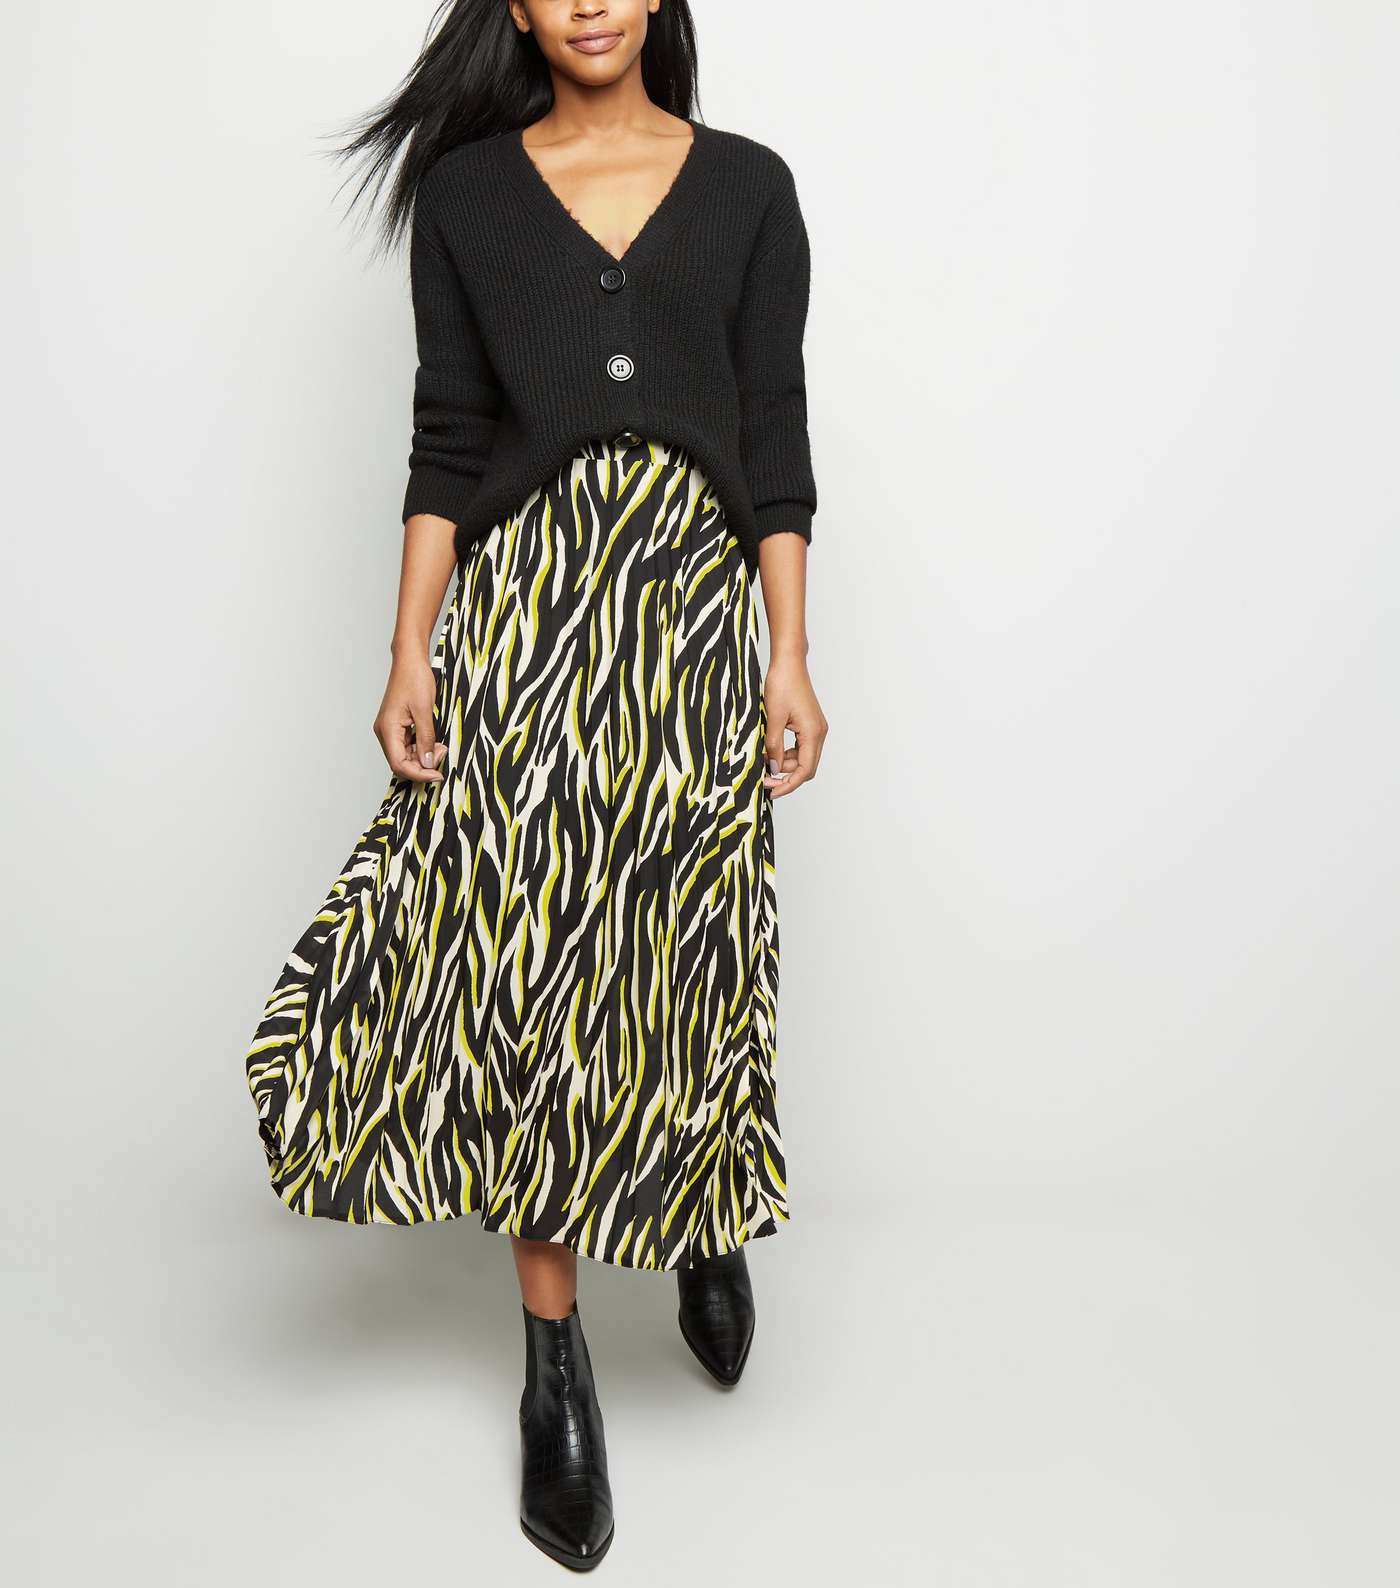 Black and Neon Zebra Print Midi Skirt Image 2